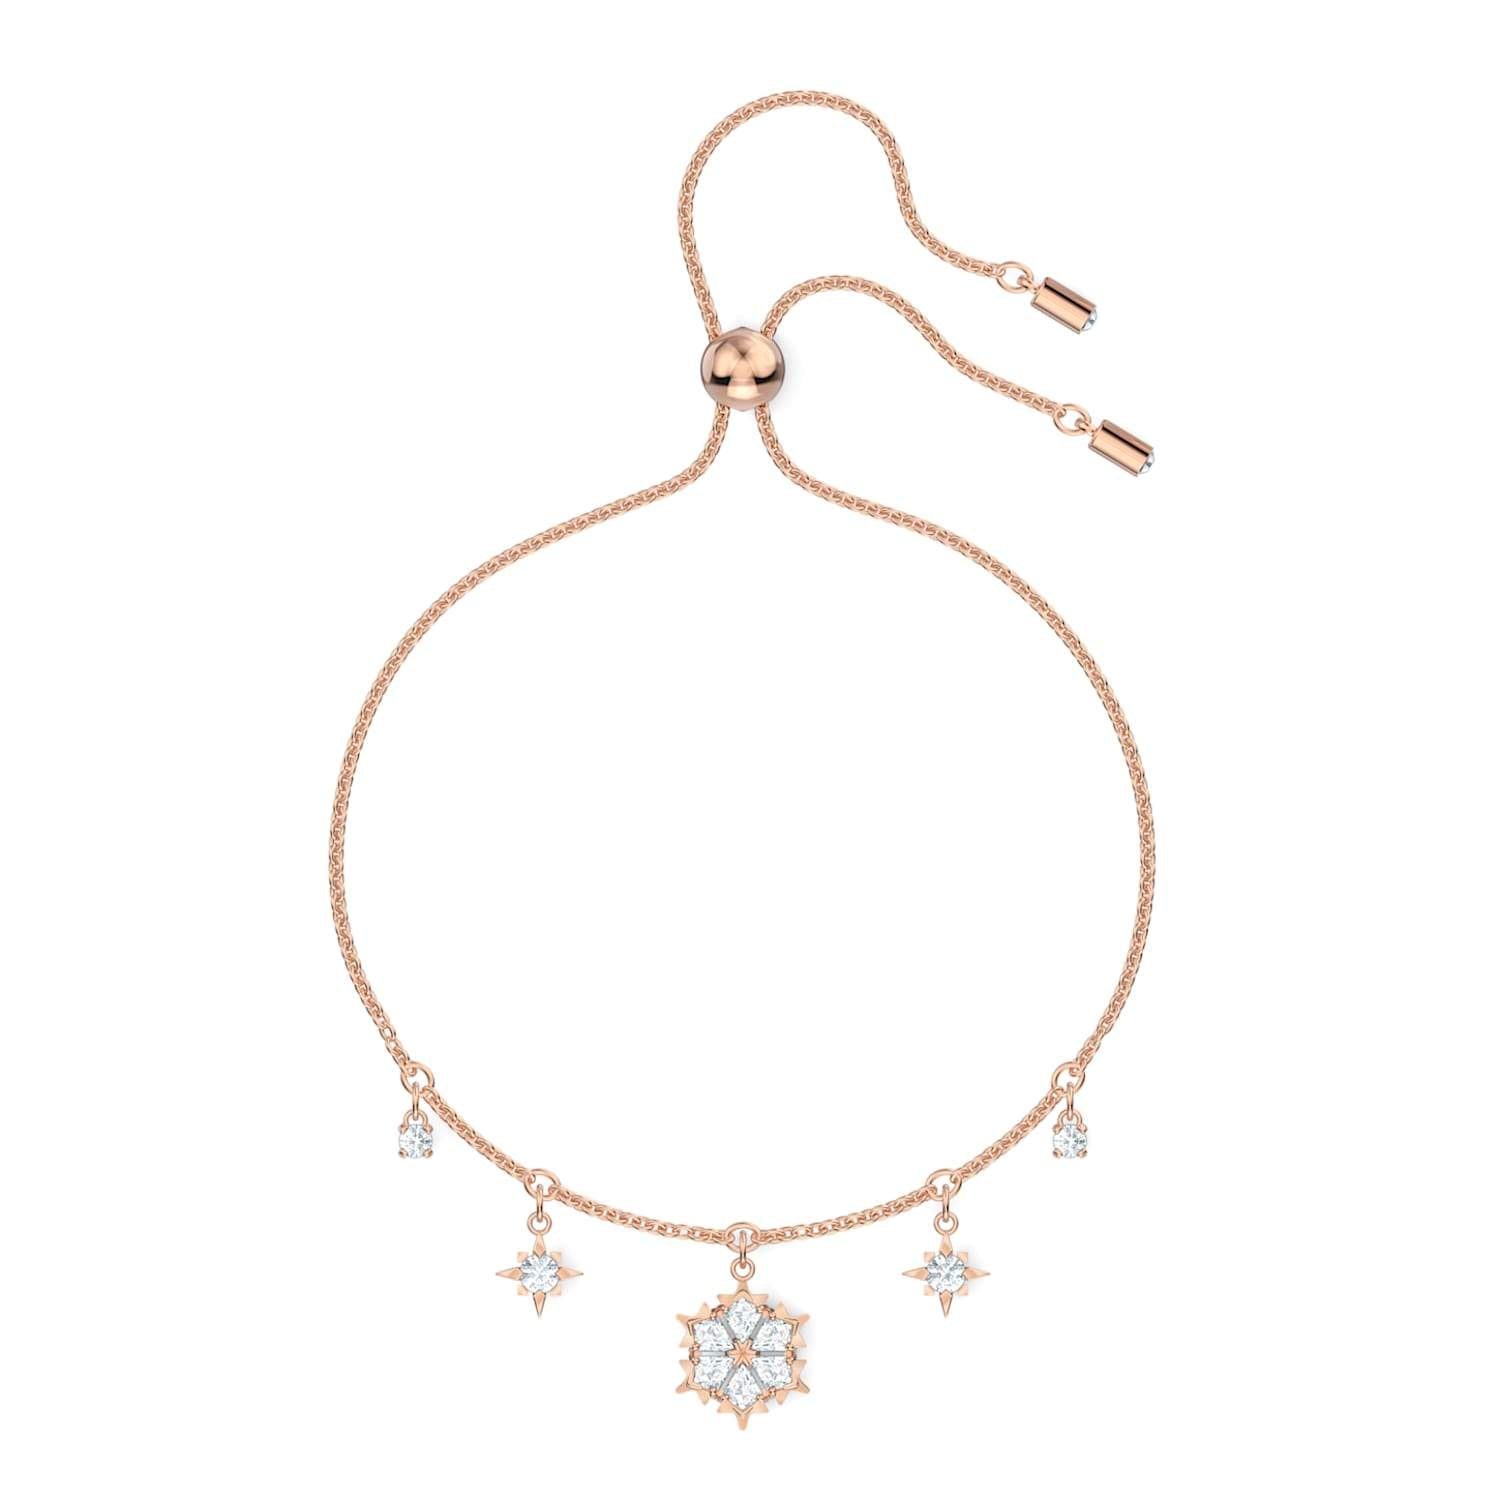 SWAROVSKI Magic Snowflake Bracelet - White & Rose Gold Tone Plated #5558186